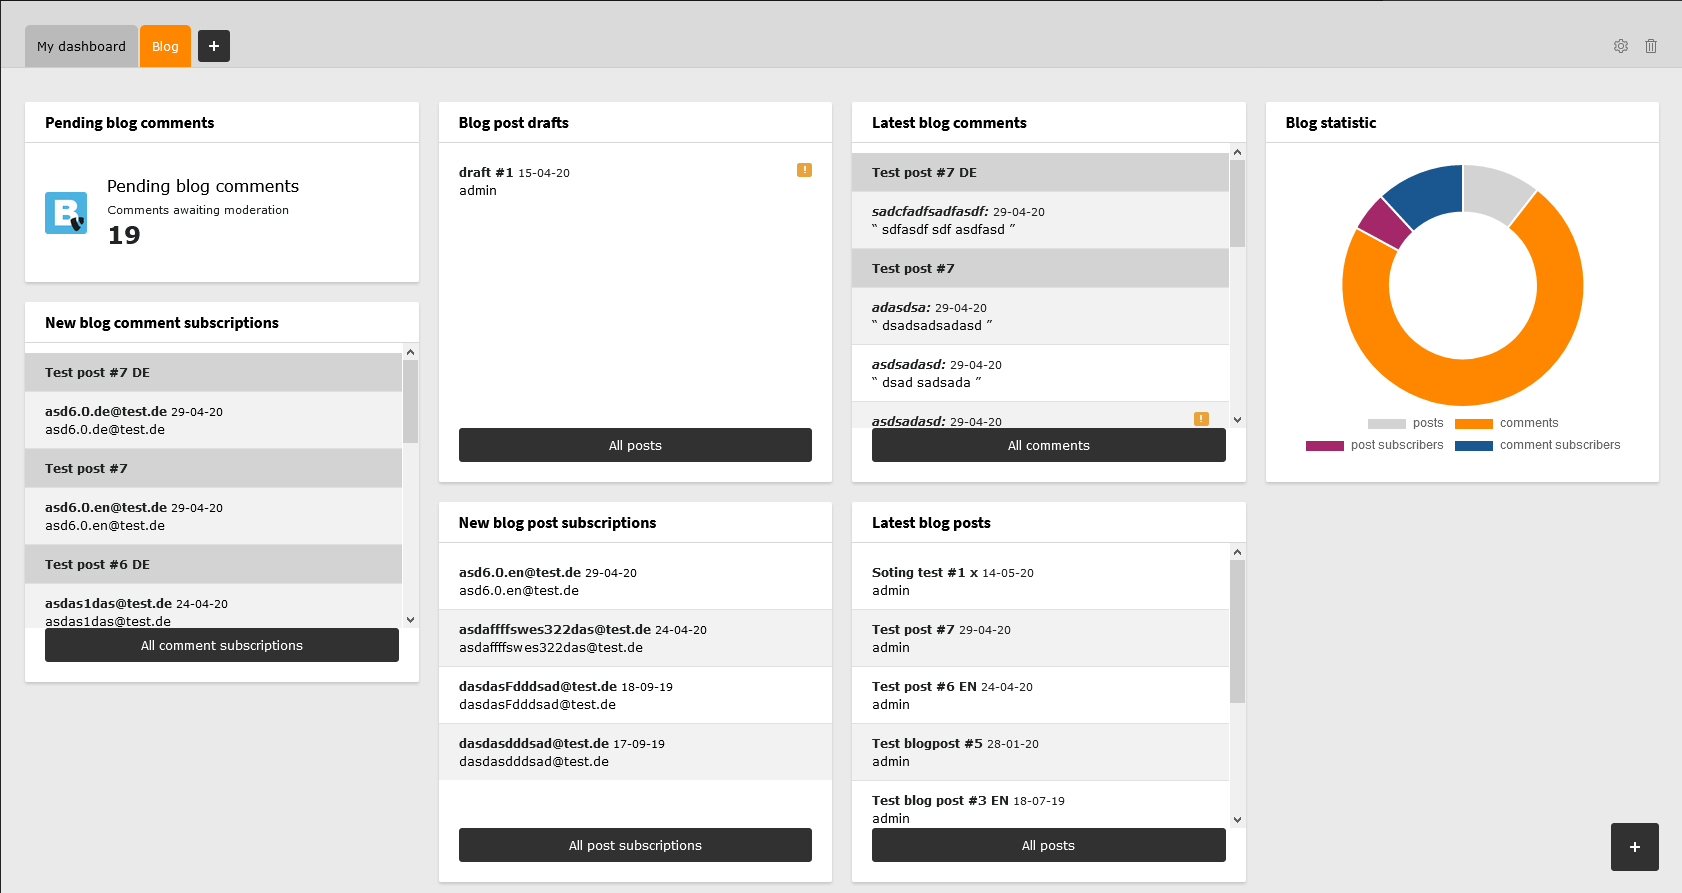 Core dashboard widgets